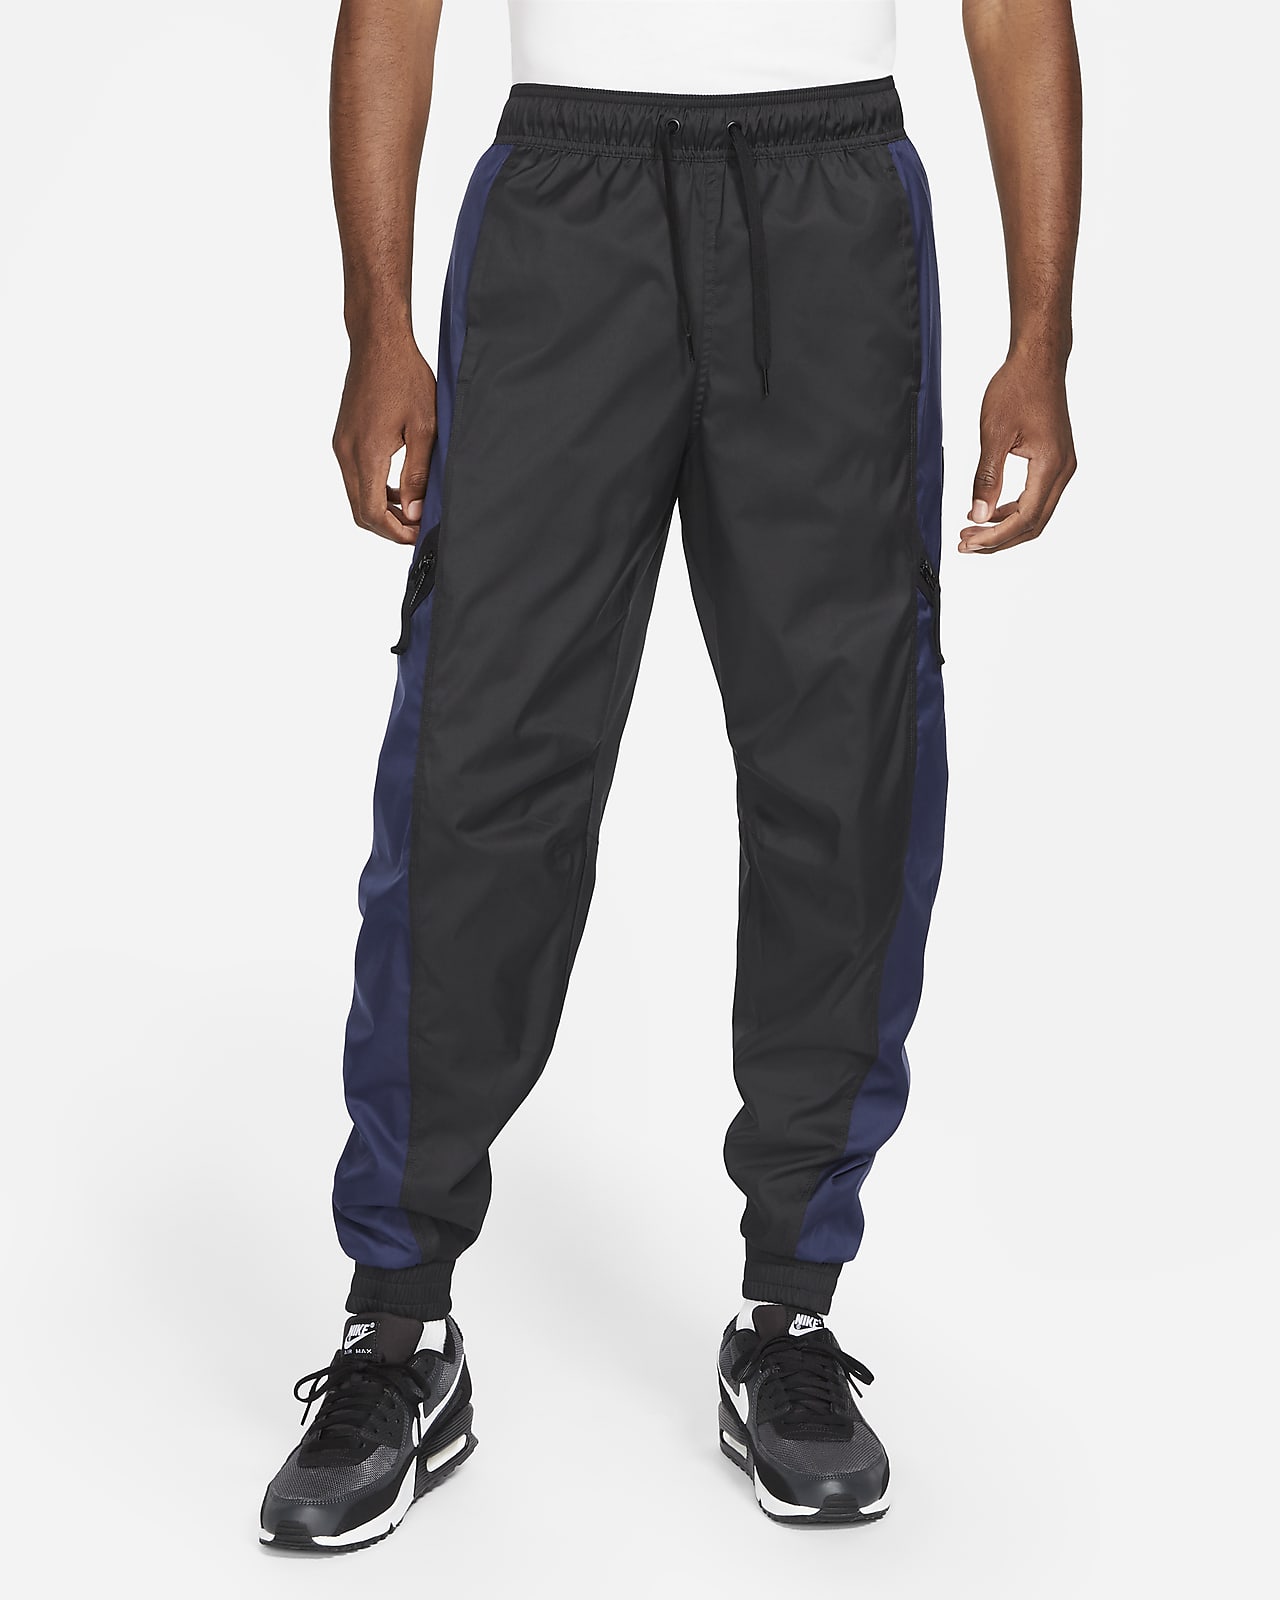 Nike Air Men's Woven Trousers. Nike LU